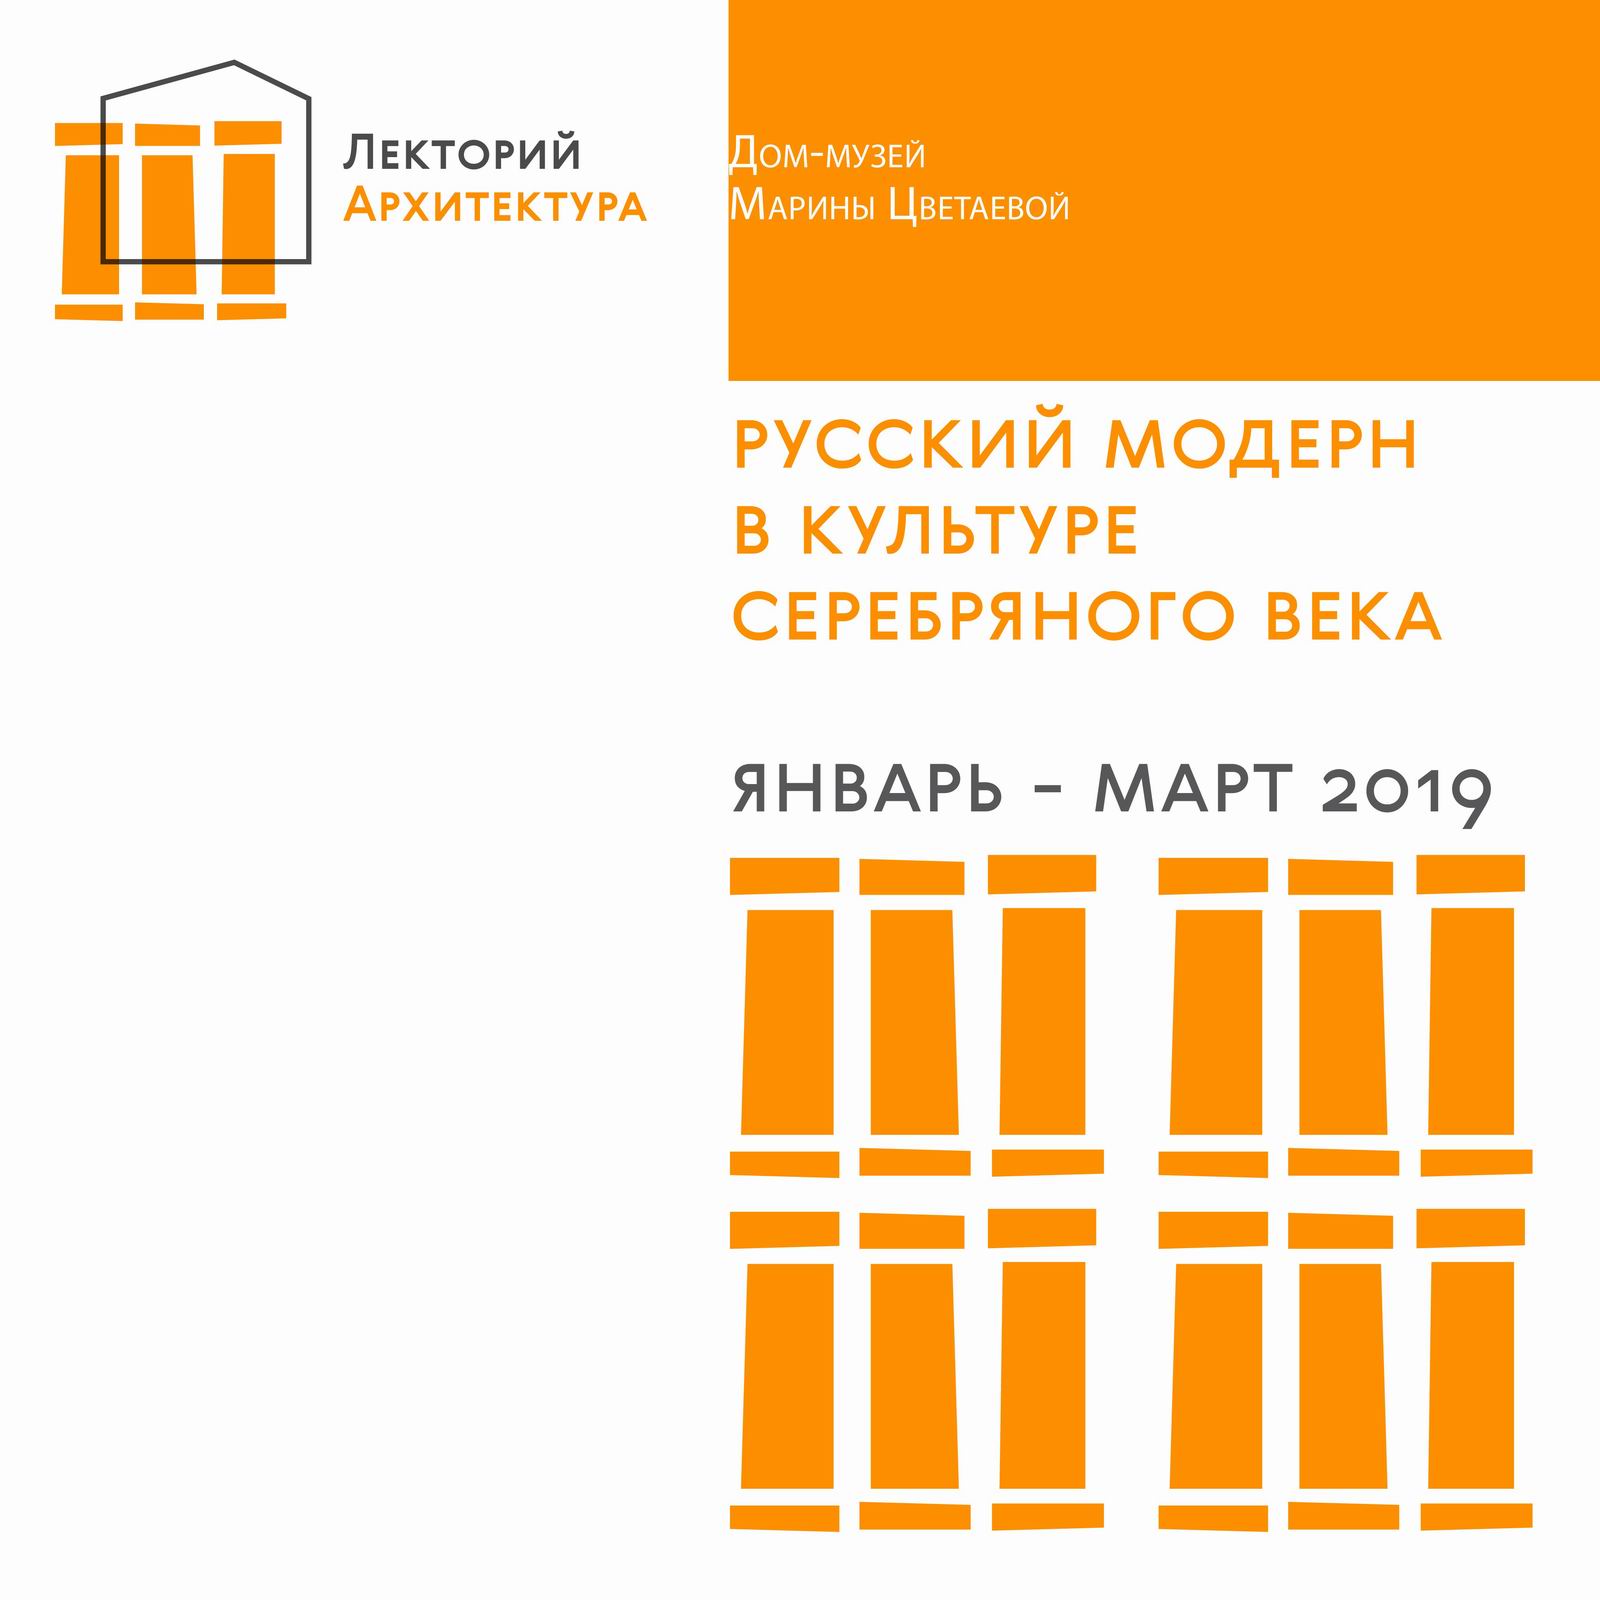 Иллюстрация: Лекторий Дома: Архитектура петербургского модерна